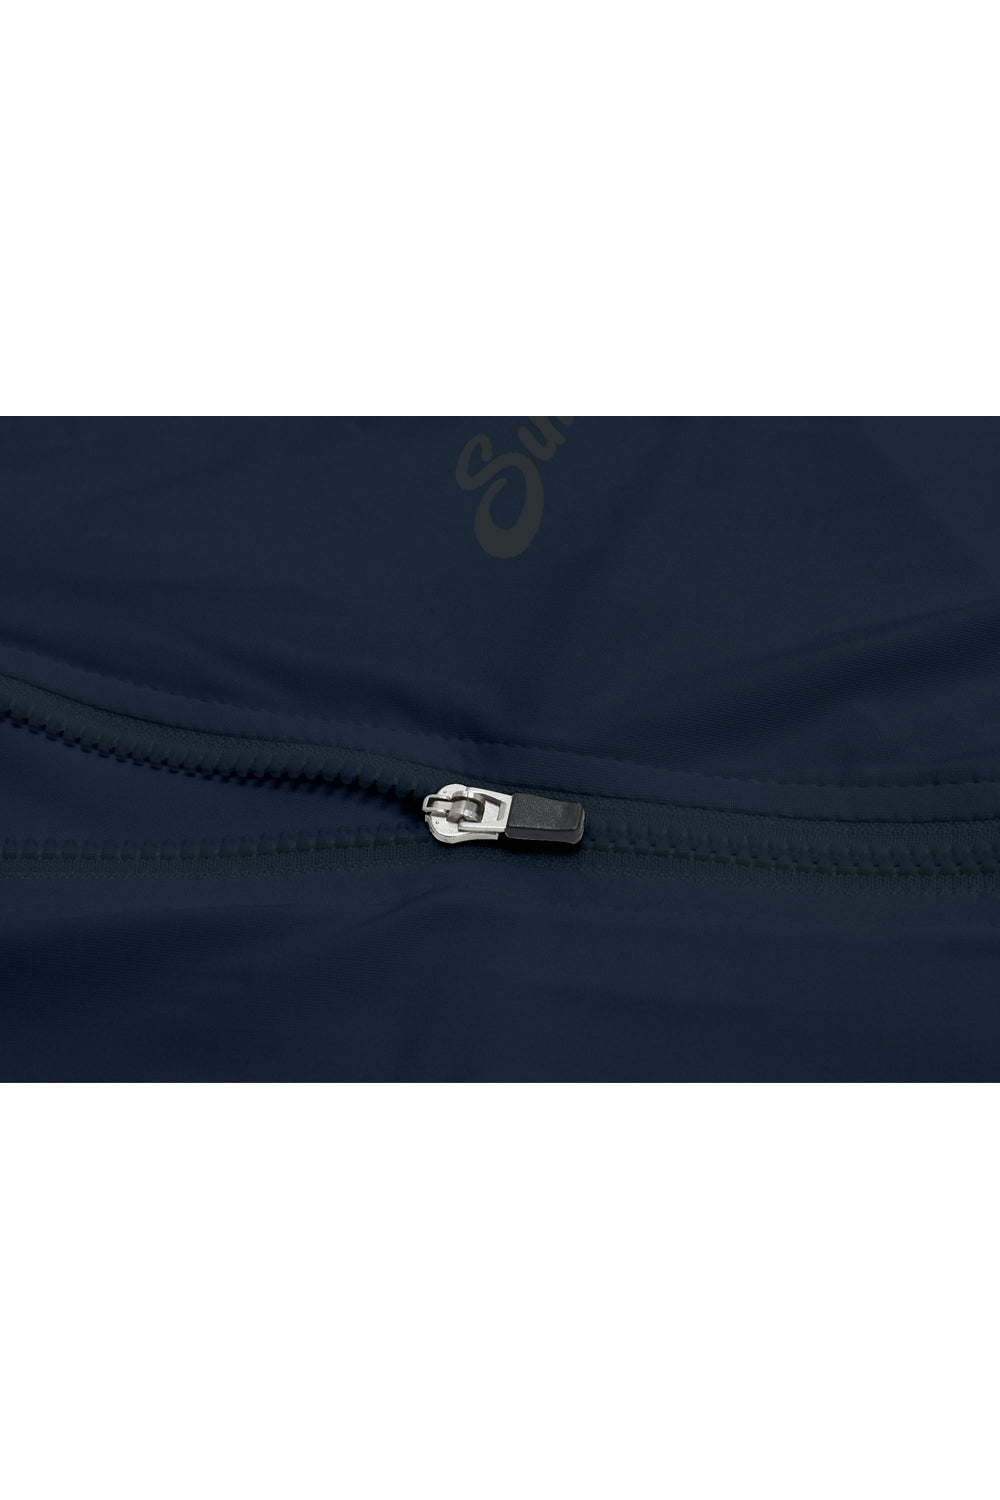 Sundried Sport Pianura Men's Navy Short Sleeve Cycle Jersey Short Sleeve Jersey Activewear